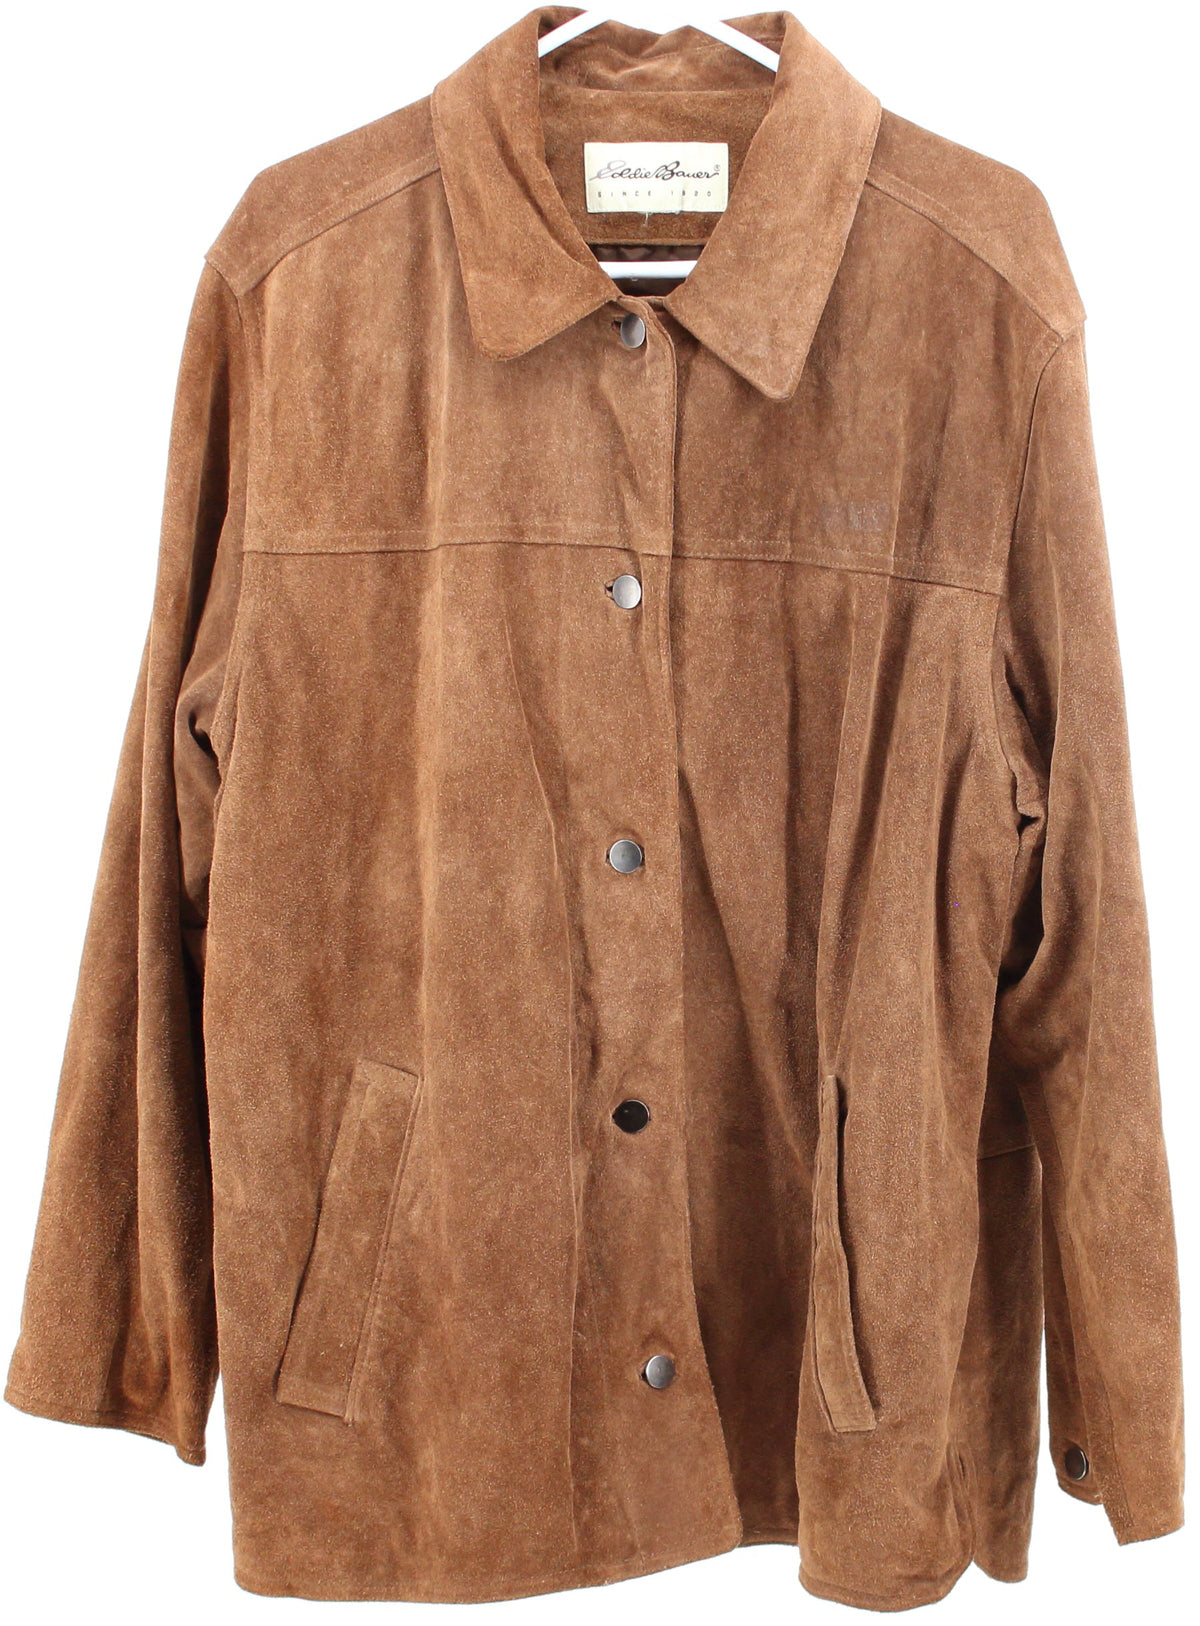 Eddie Bauer Brown Leather Coat